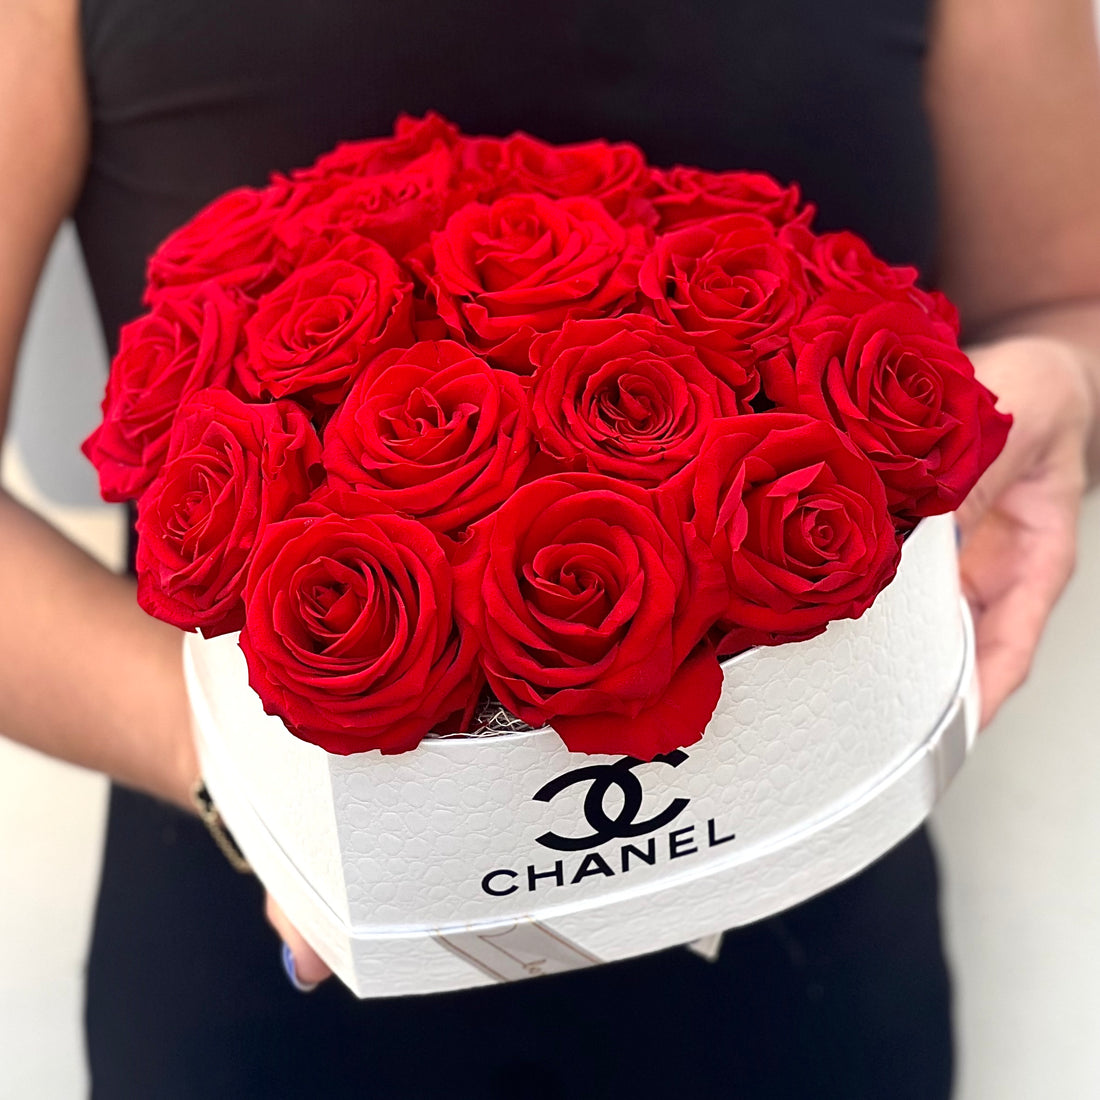 Eternal Love Rose Preserved Arrangement in Heart-Shaped Chanel Box